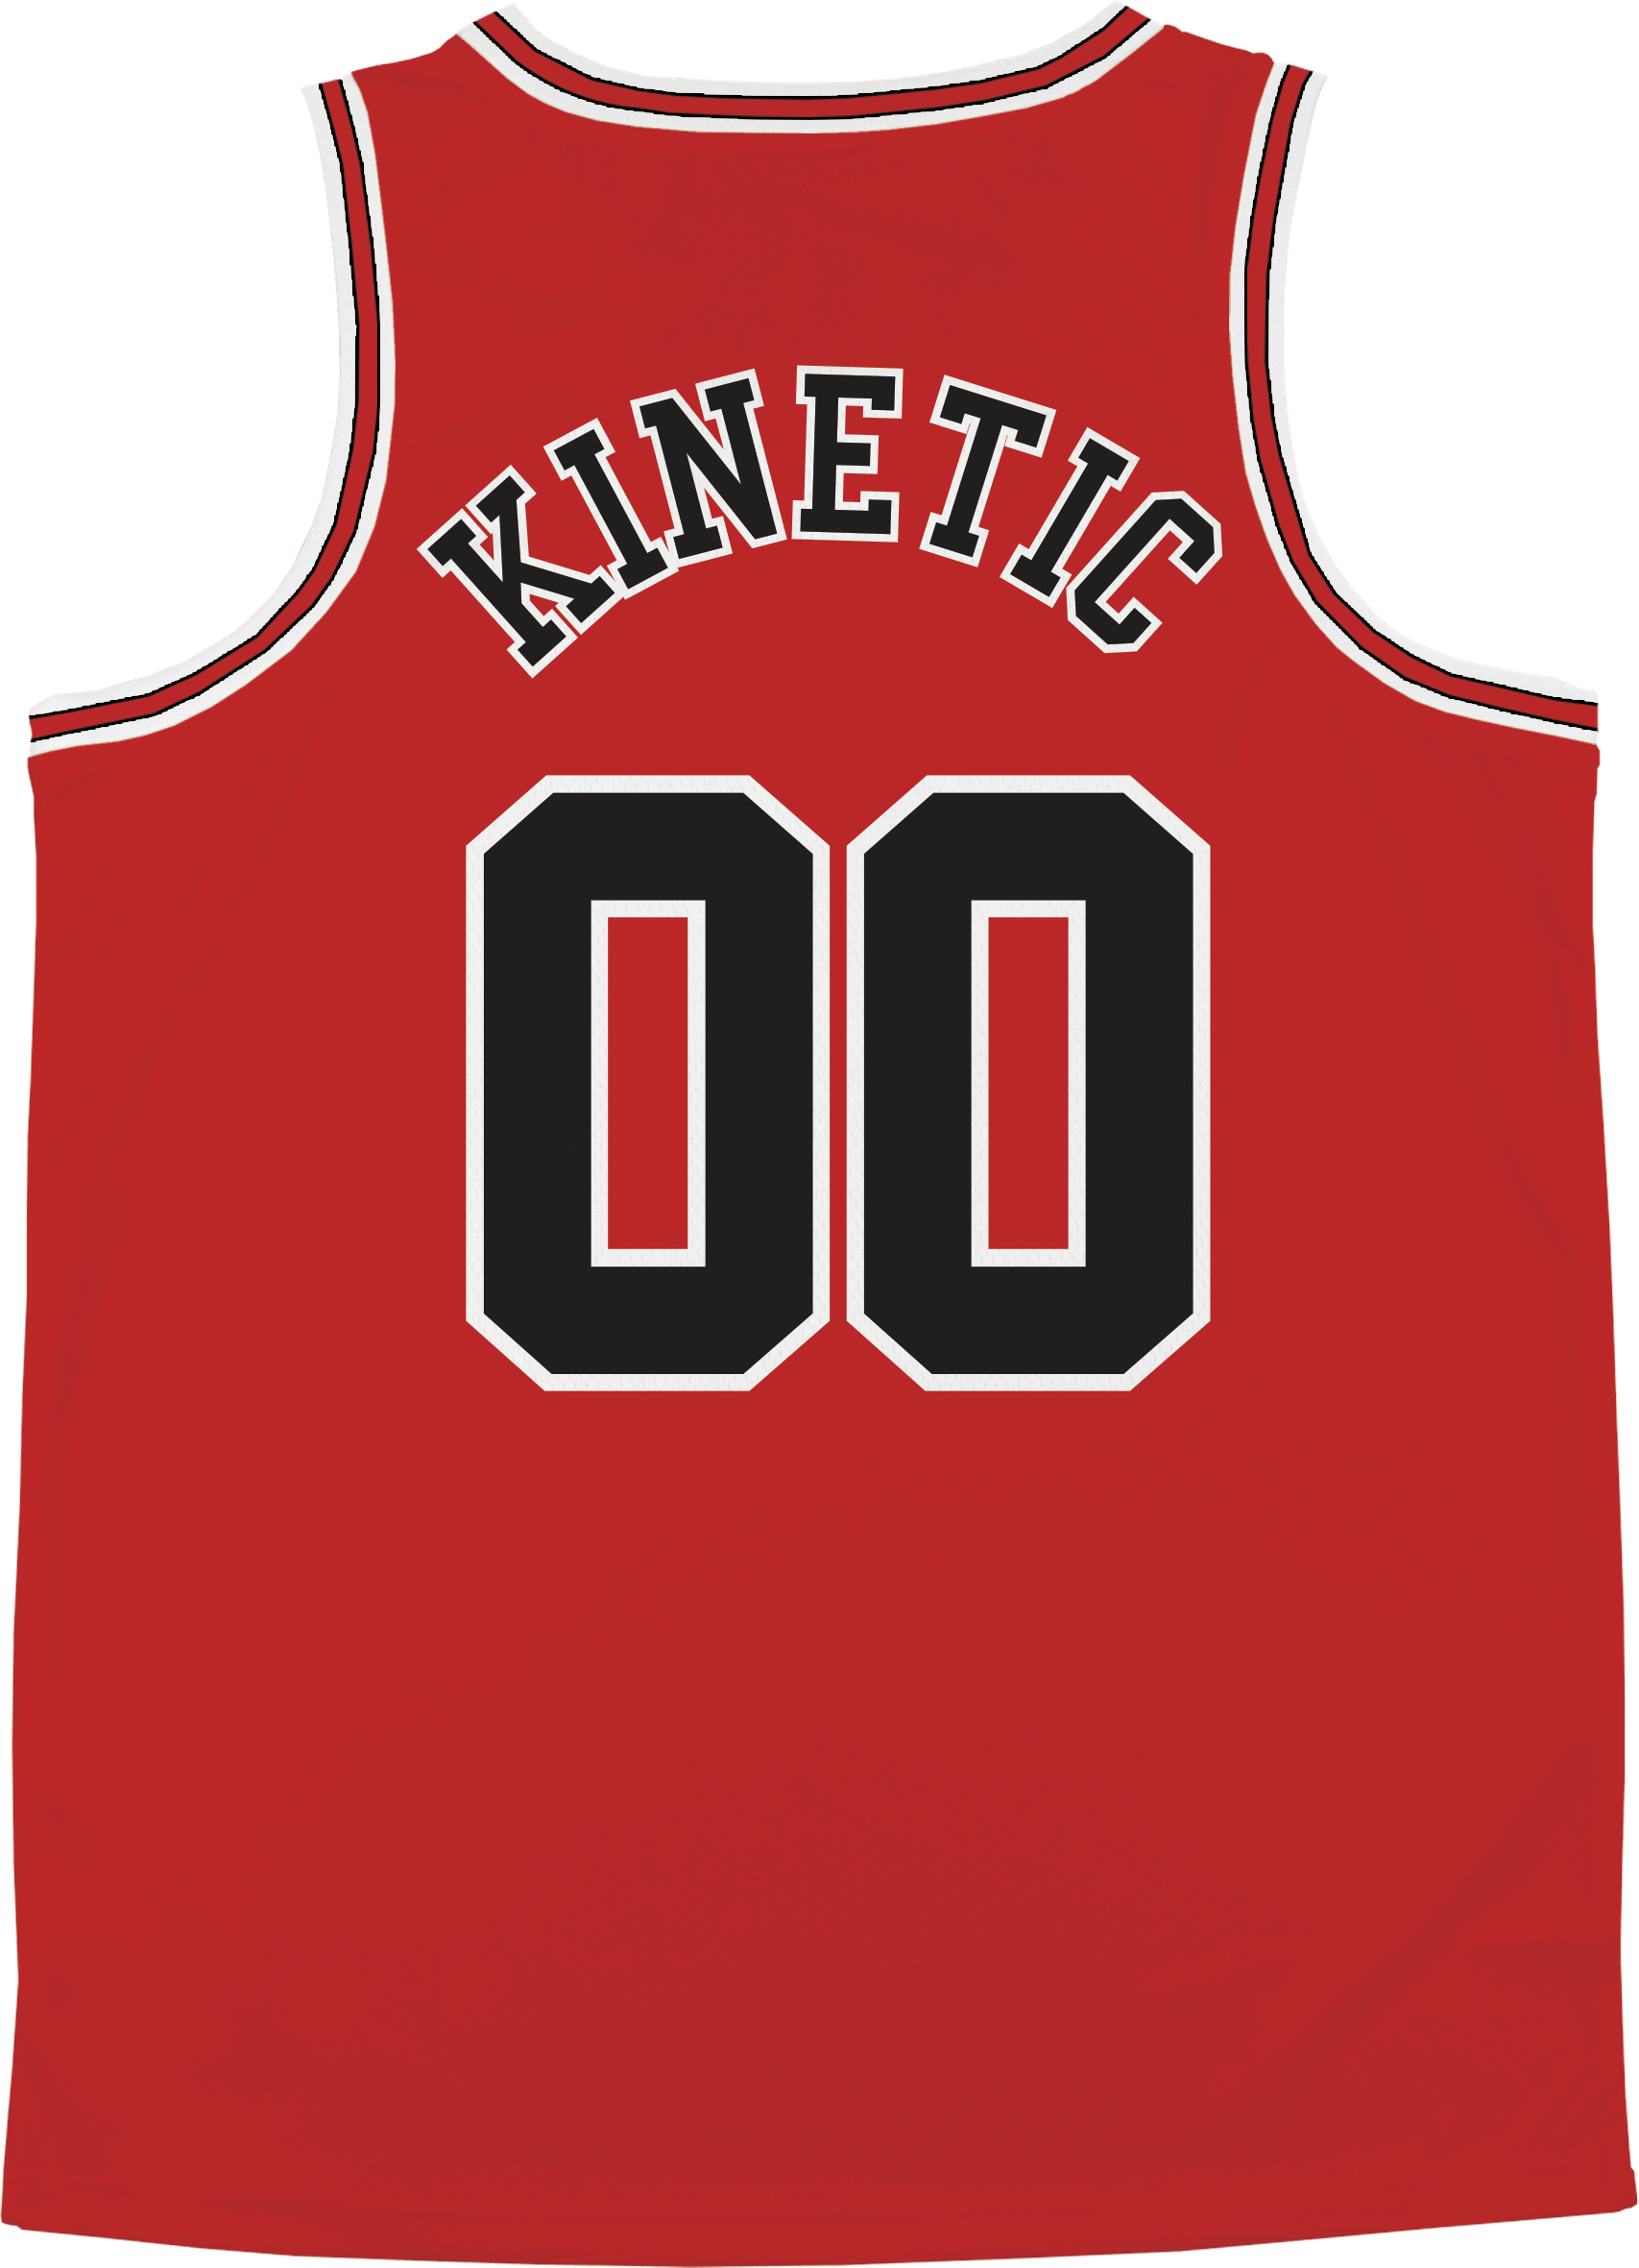 Kdr Black Basketball Jersey XXL / Kappa Delta RHO